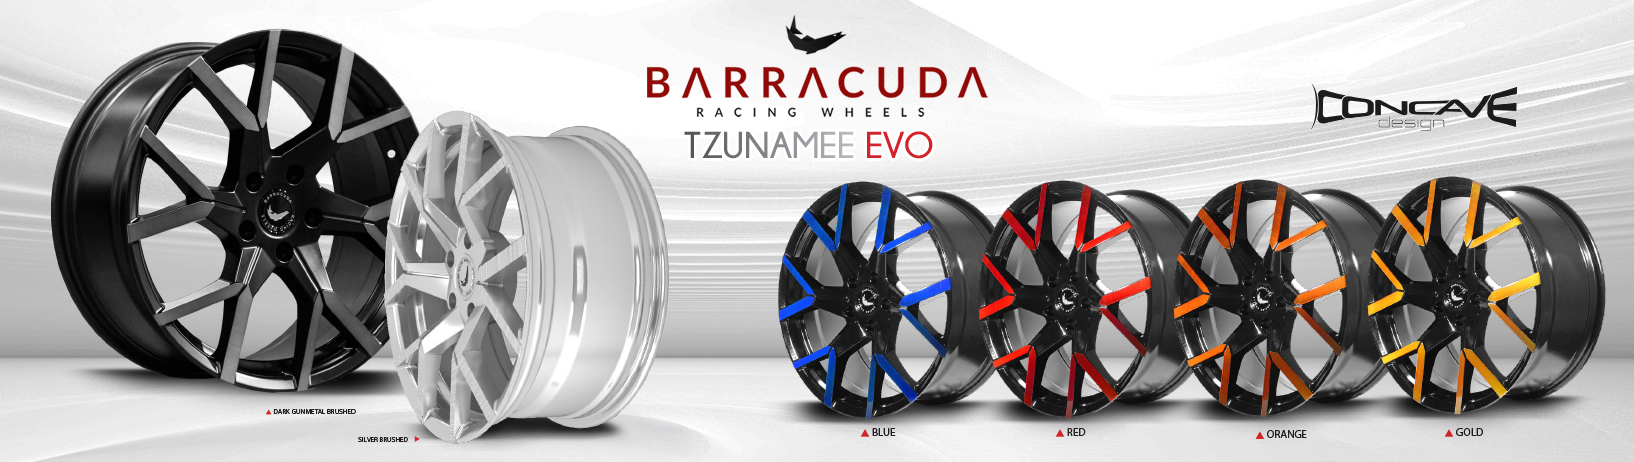 Barracuda Dragoon für Mercedes W213 E-Klasse - Barracuda Wheels / Alufelgen